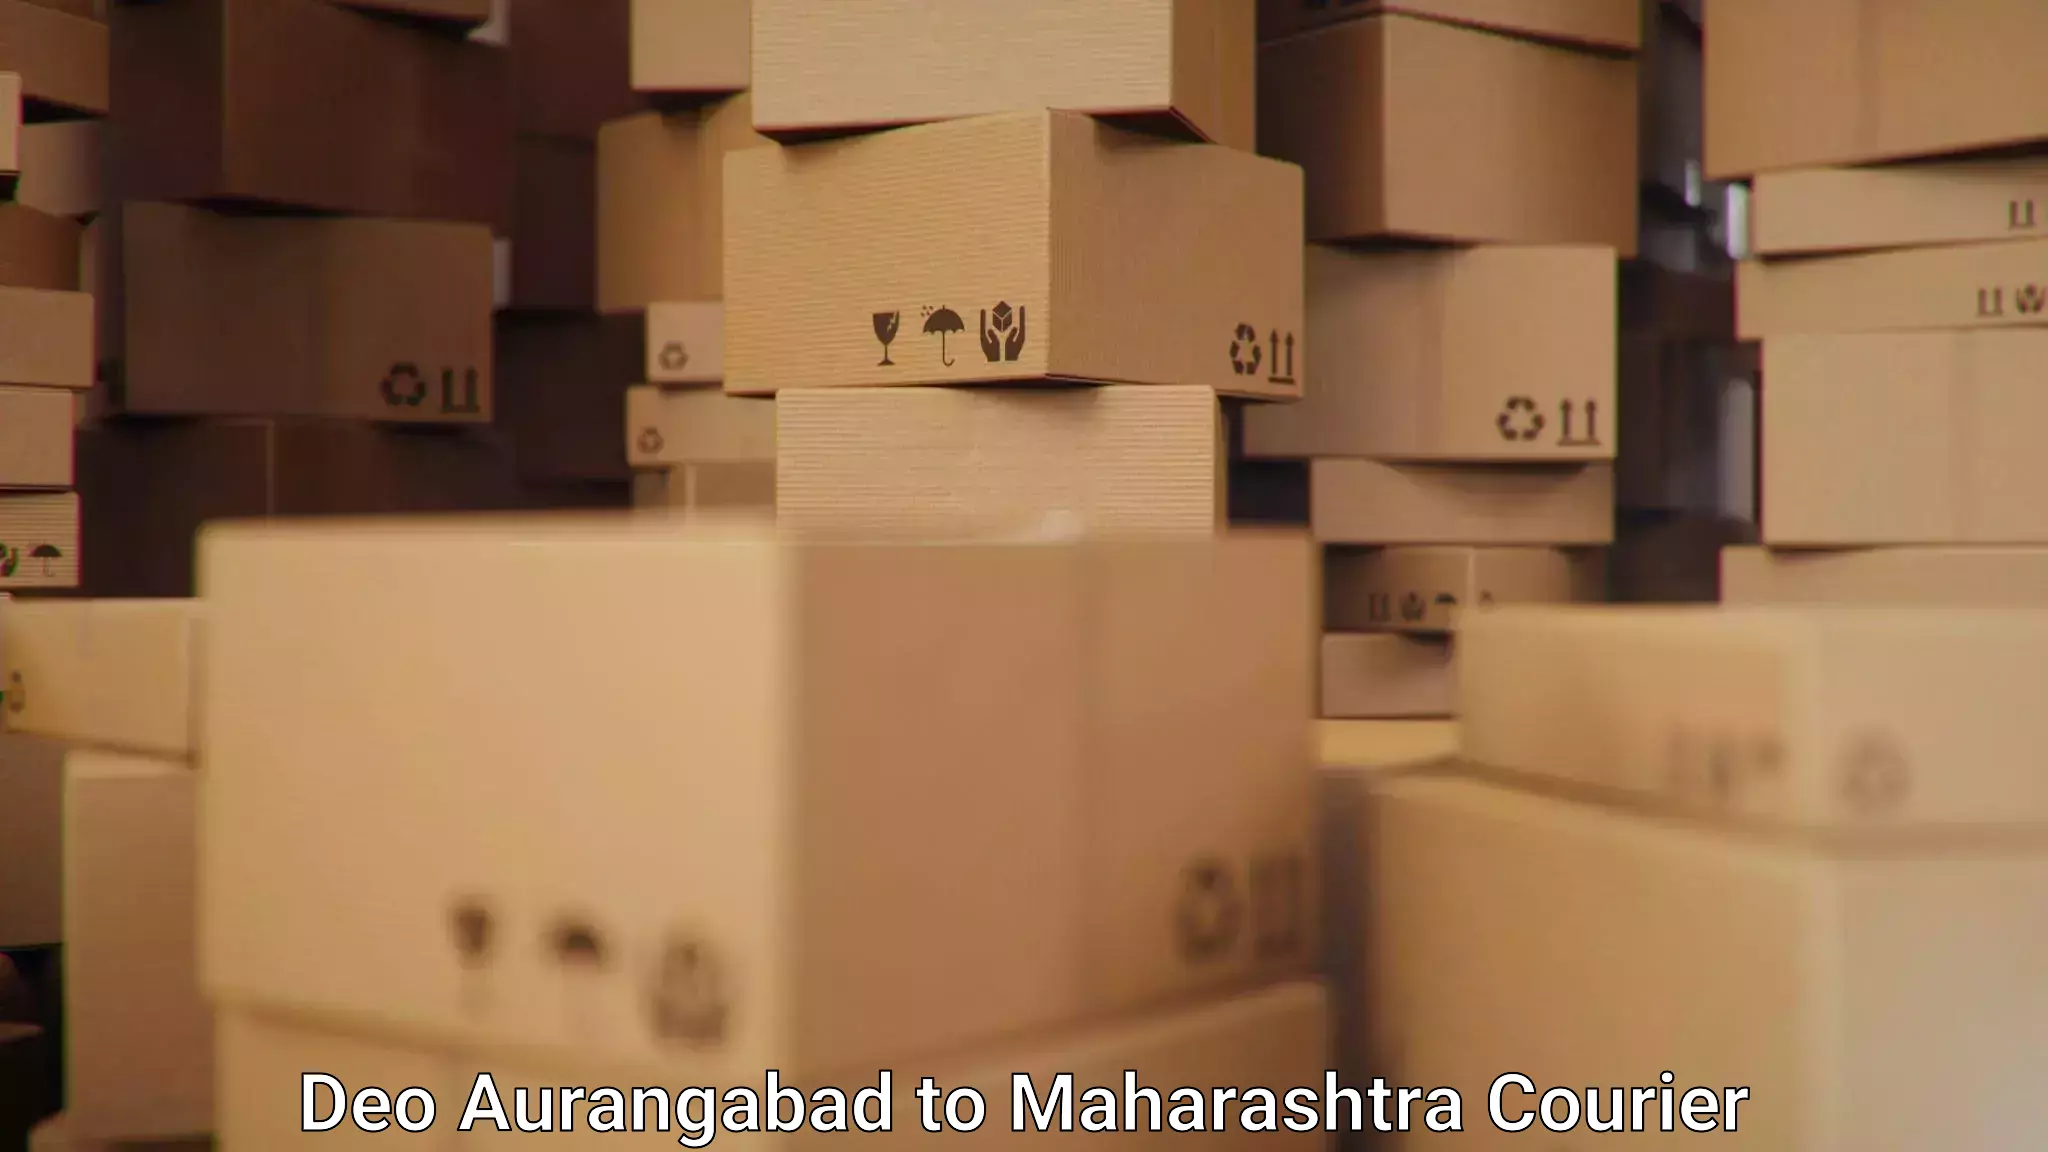 Ground shipping Deo Aurangabad to Virar